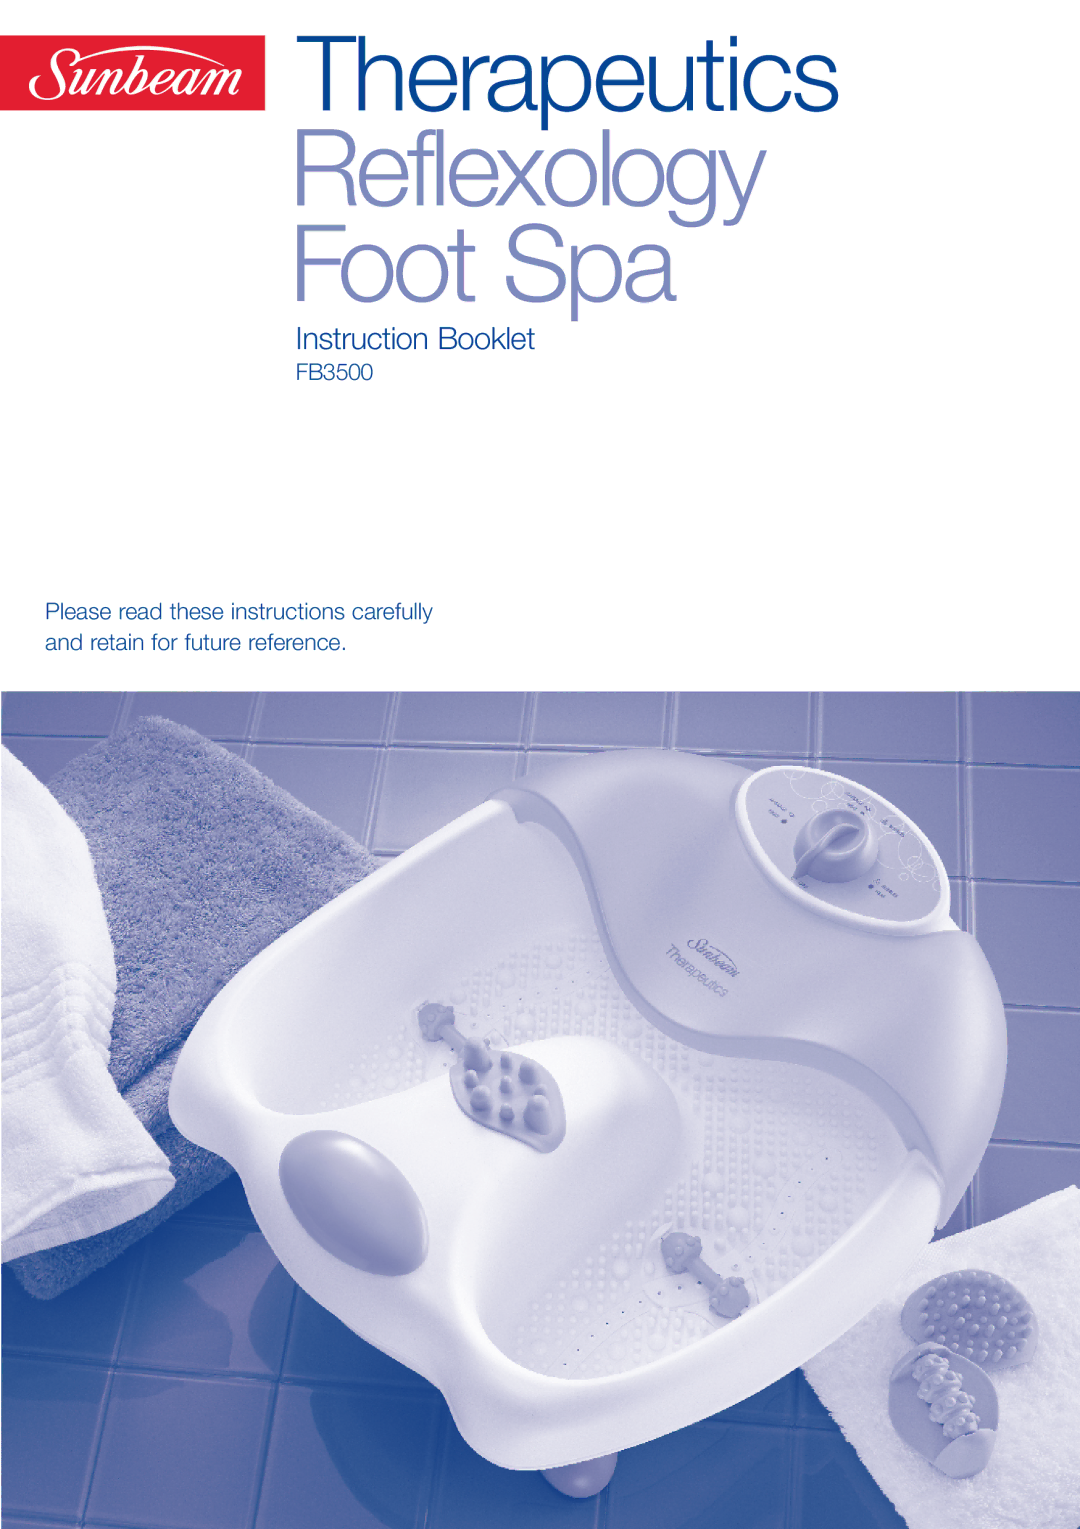 Sunbeam FB3500 manual Reflexology Foot Spa 